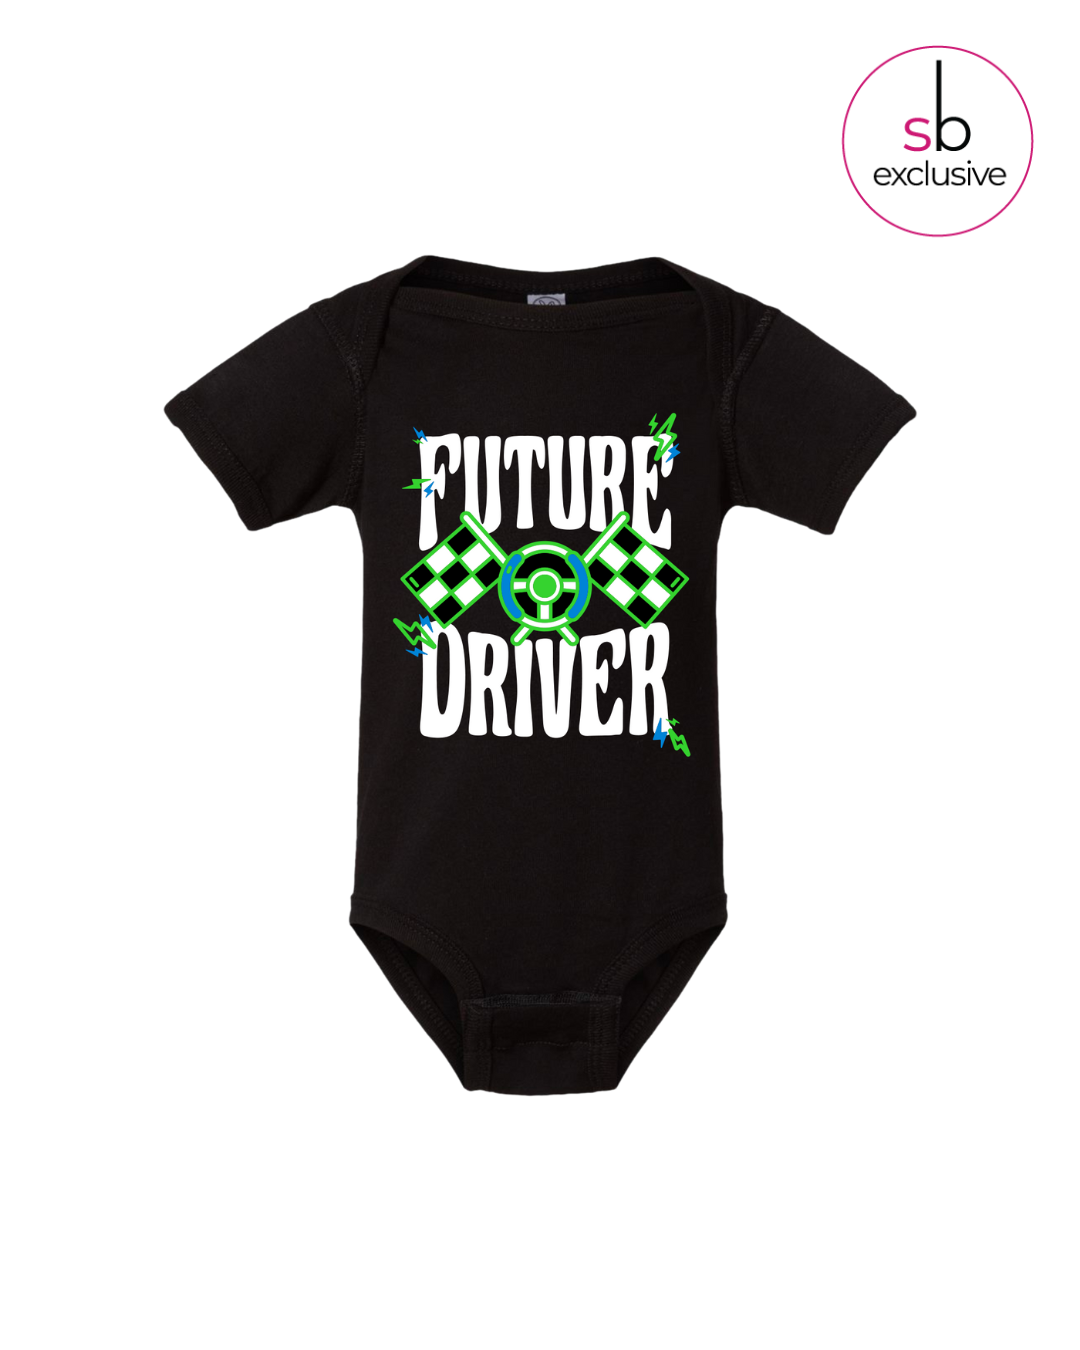 Future Driver Onesie - Black, Neon Green